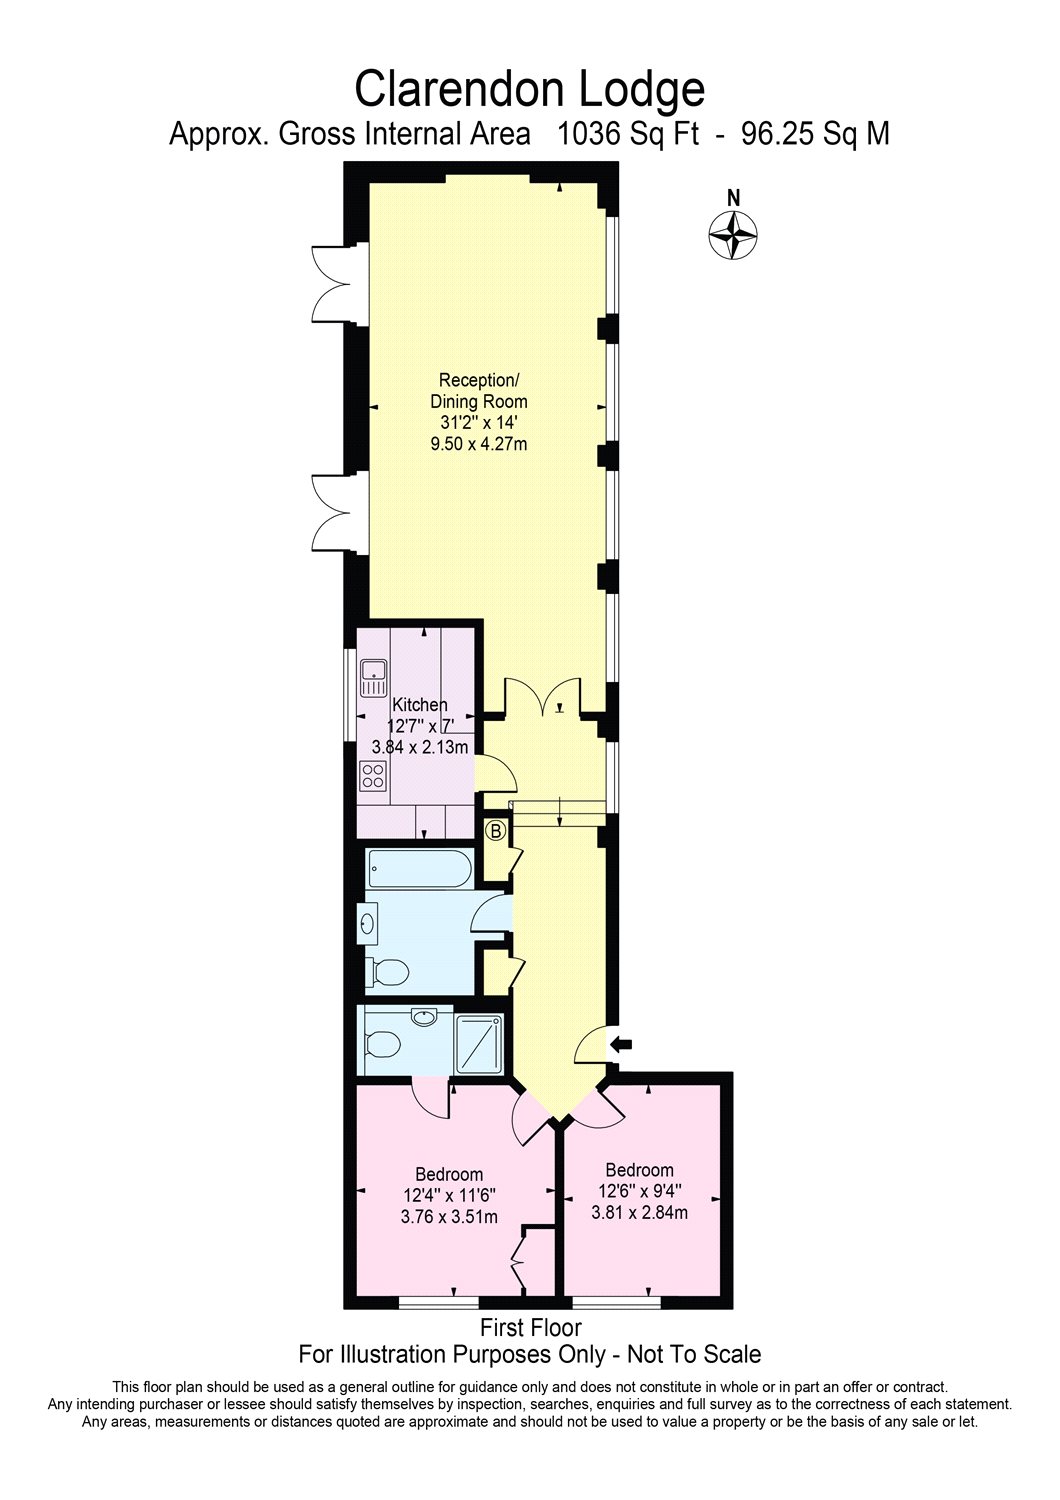 2 Bedrooms Flat to rent in Paddington Street, Marylebone W1U